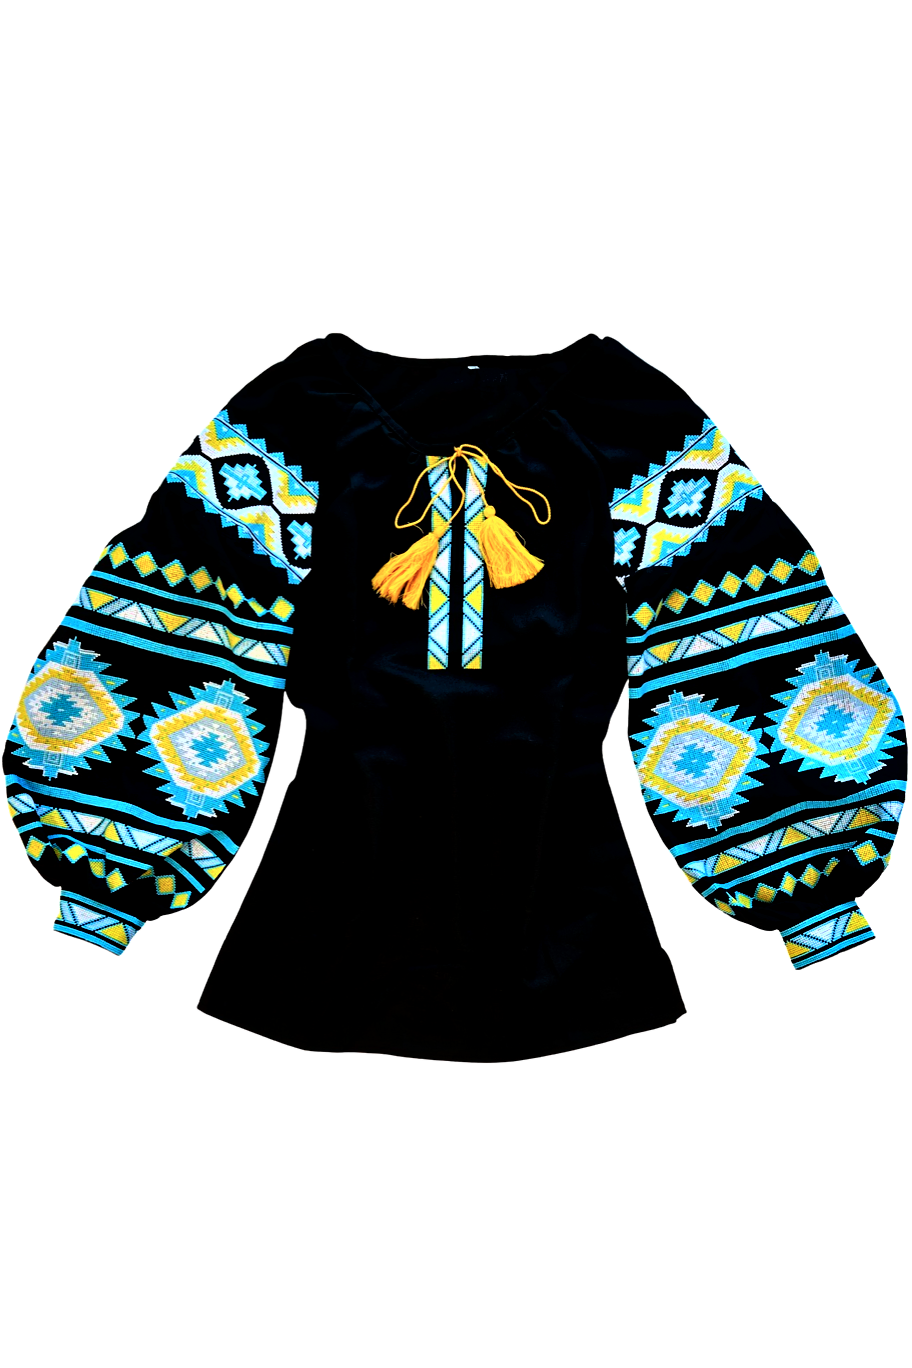 Ukrainian black blouse "Peremoha" Blue and yellow